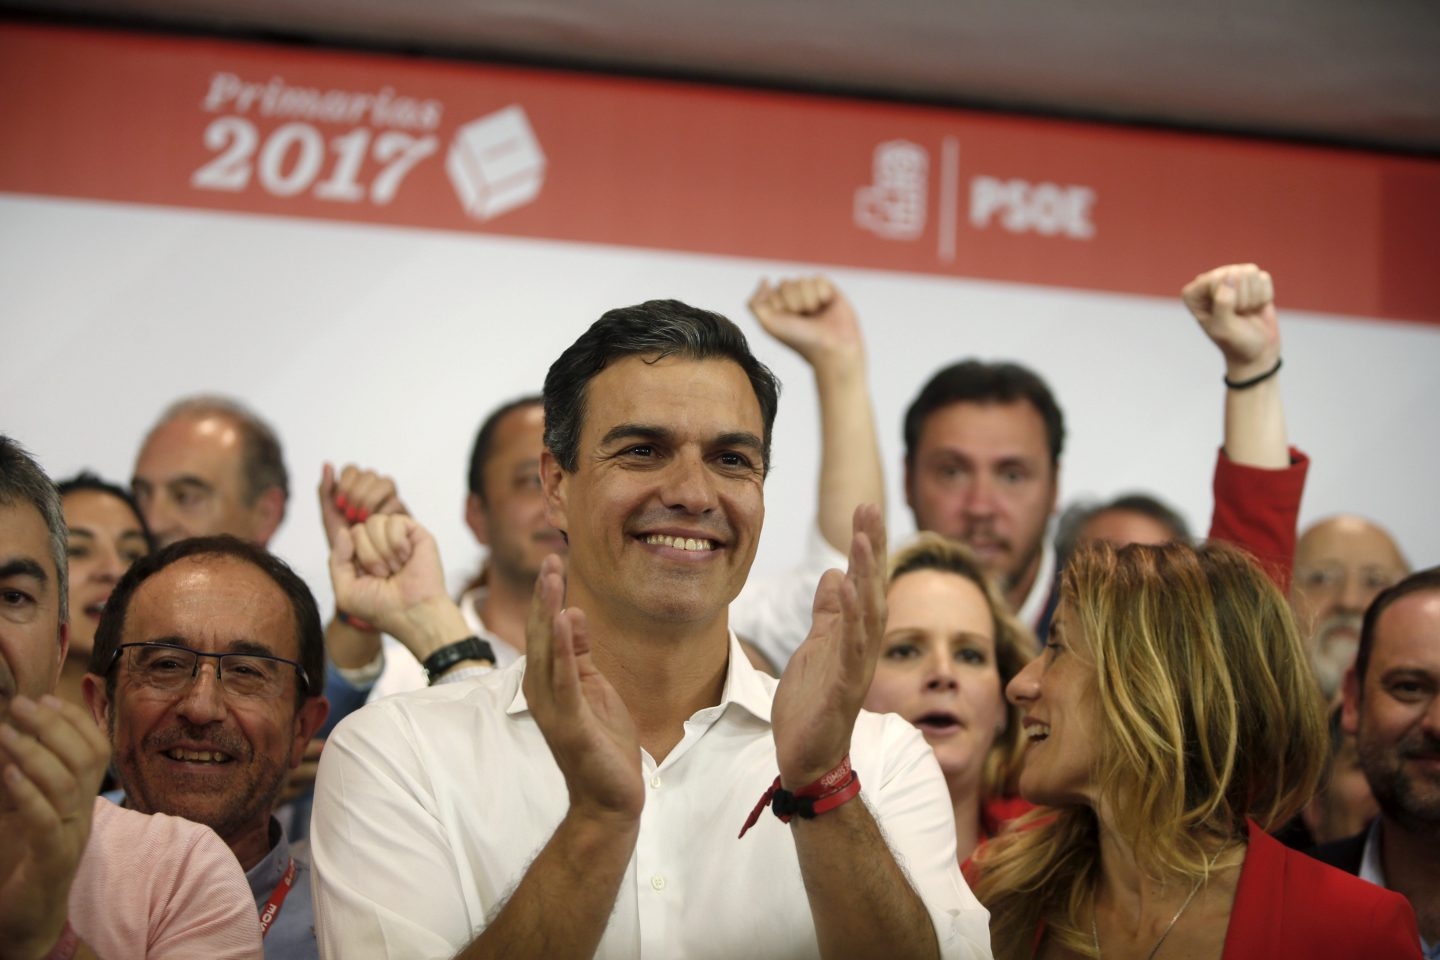 Pedro Sánchez celebra la victoria en Ferraz.